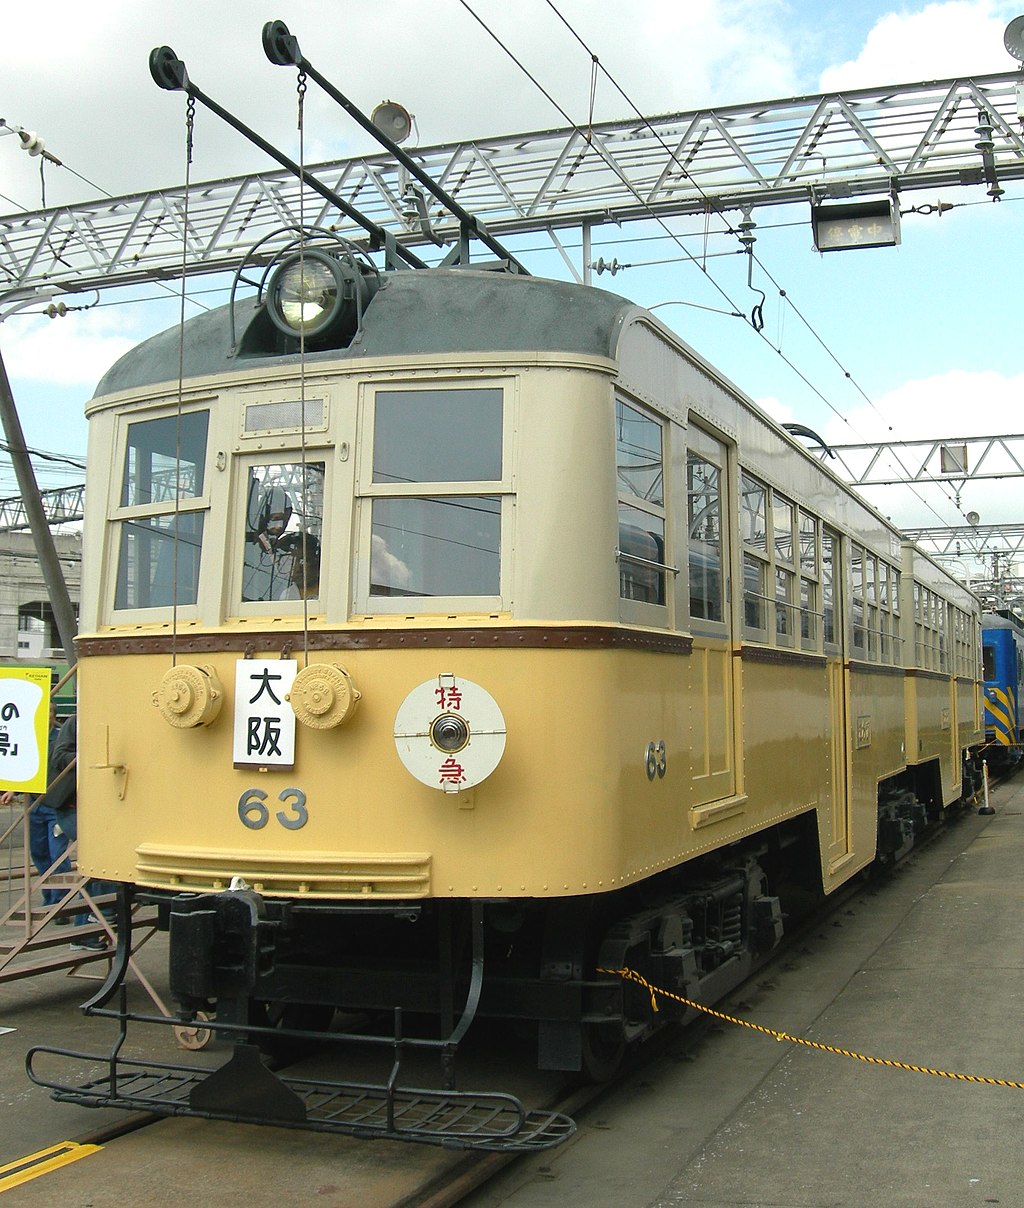 京阪60型電車 - Wikiwand